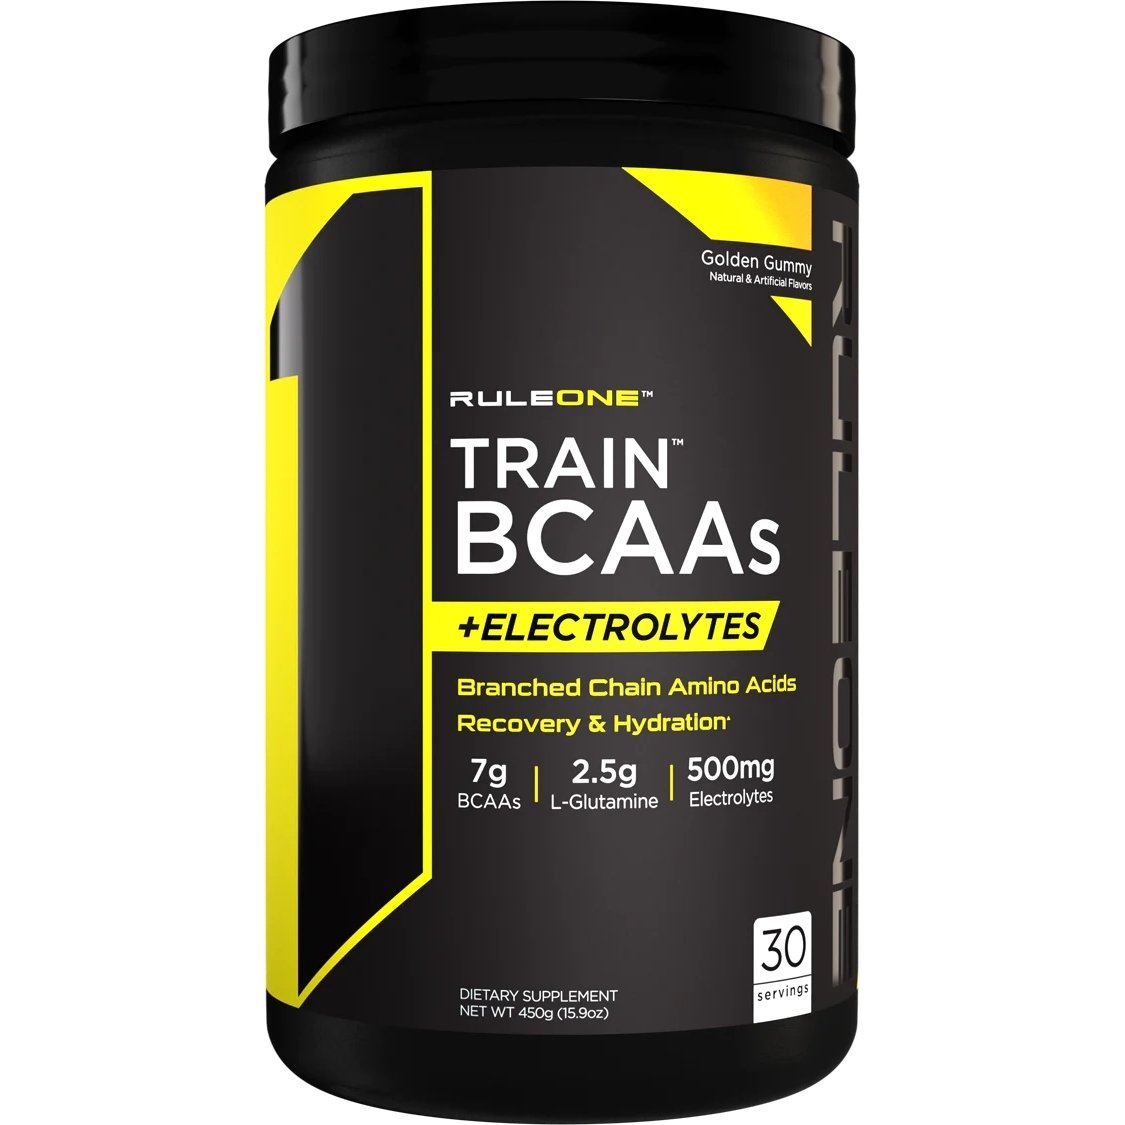 Аминокислота BCAA Rule 1 Train BCAAs + Electrolytes, 450 грамм Желейные конфеты,  ml, Rule One Proteins. BCAA. Weight Loss स्वास्थ्य लाभ Anti-catabolic properties Lean muscle mass 